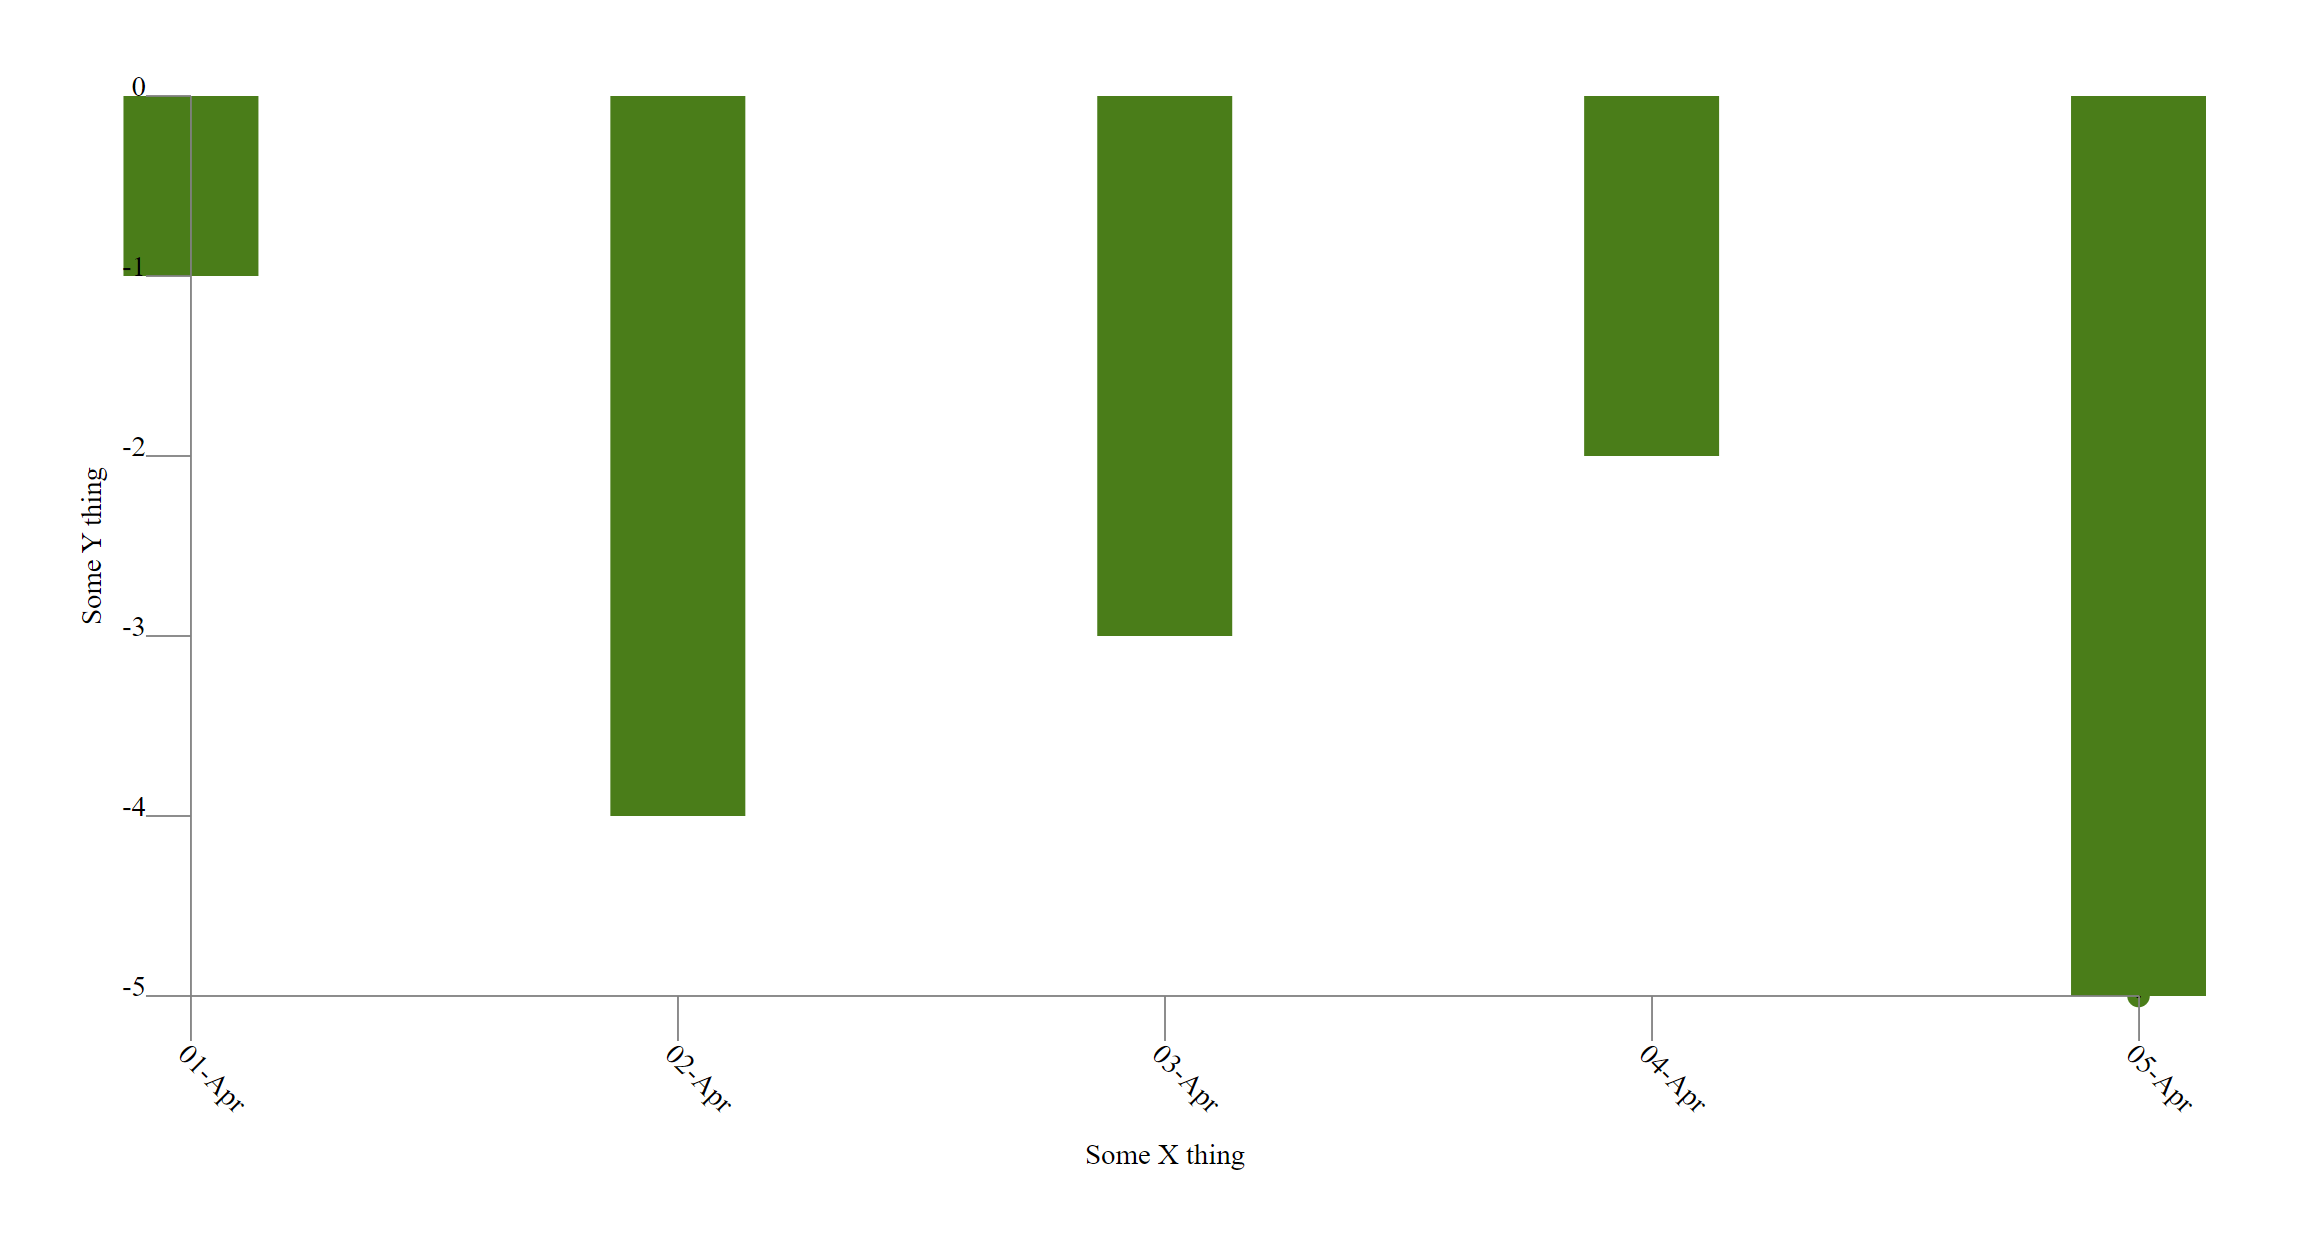 A dropping bar chart